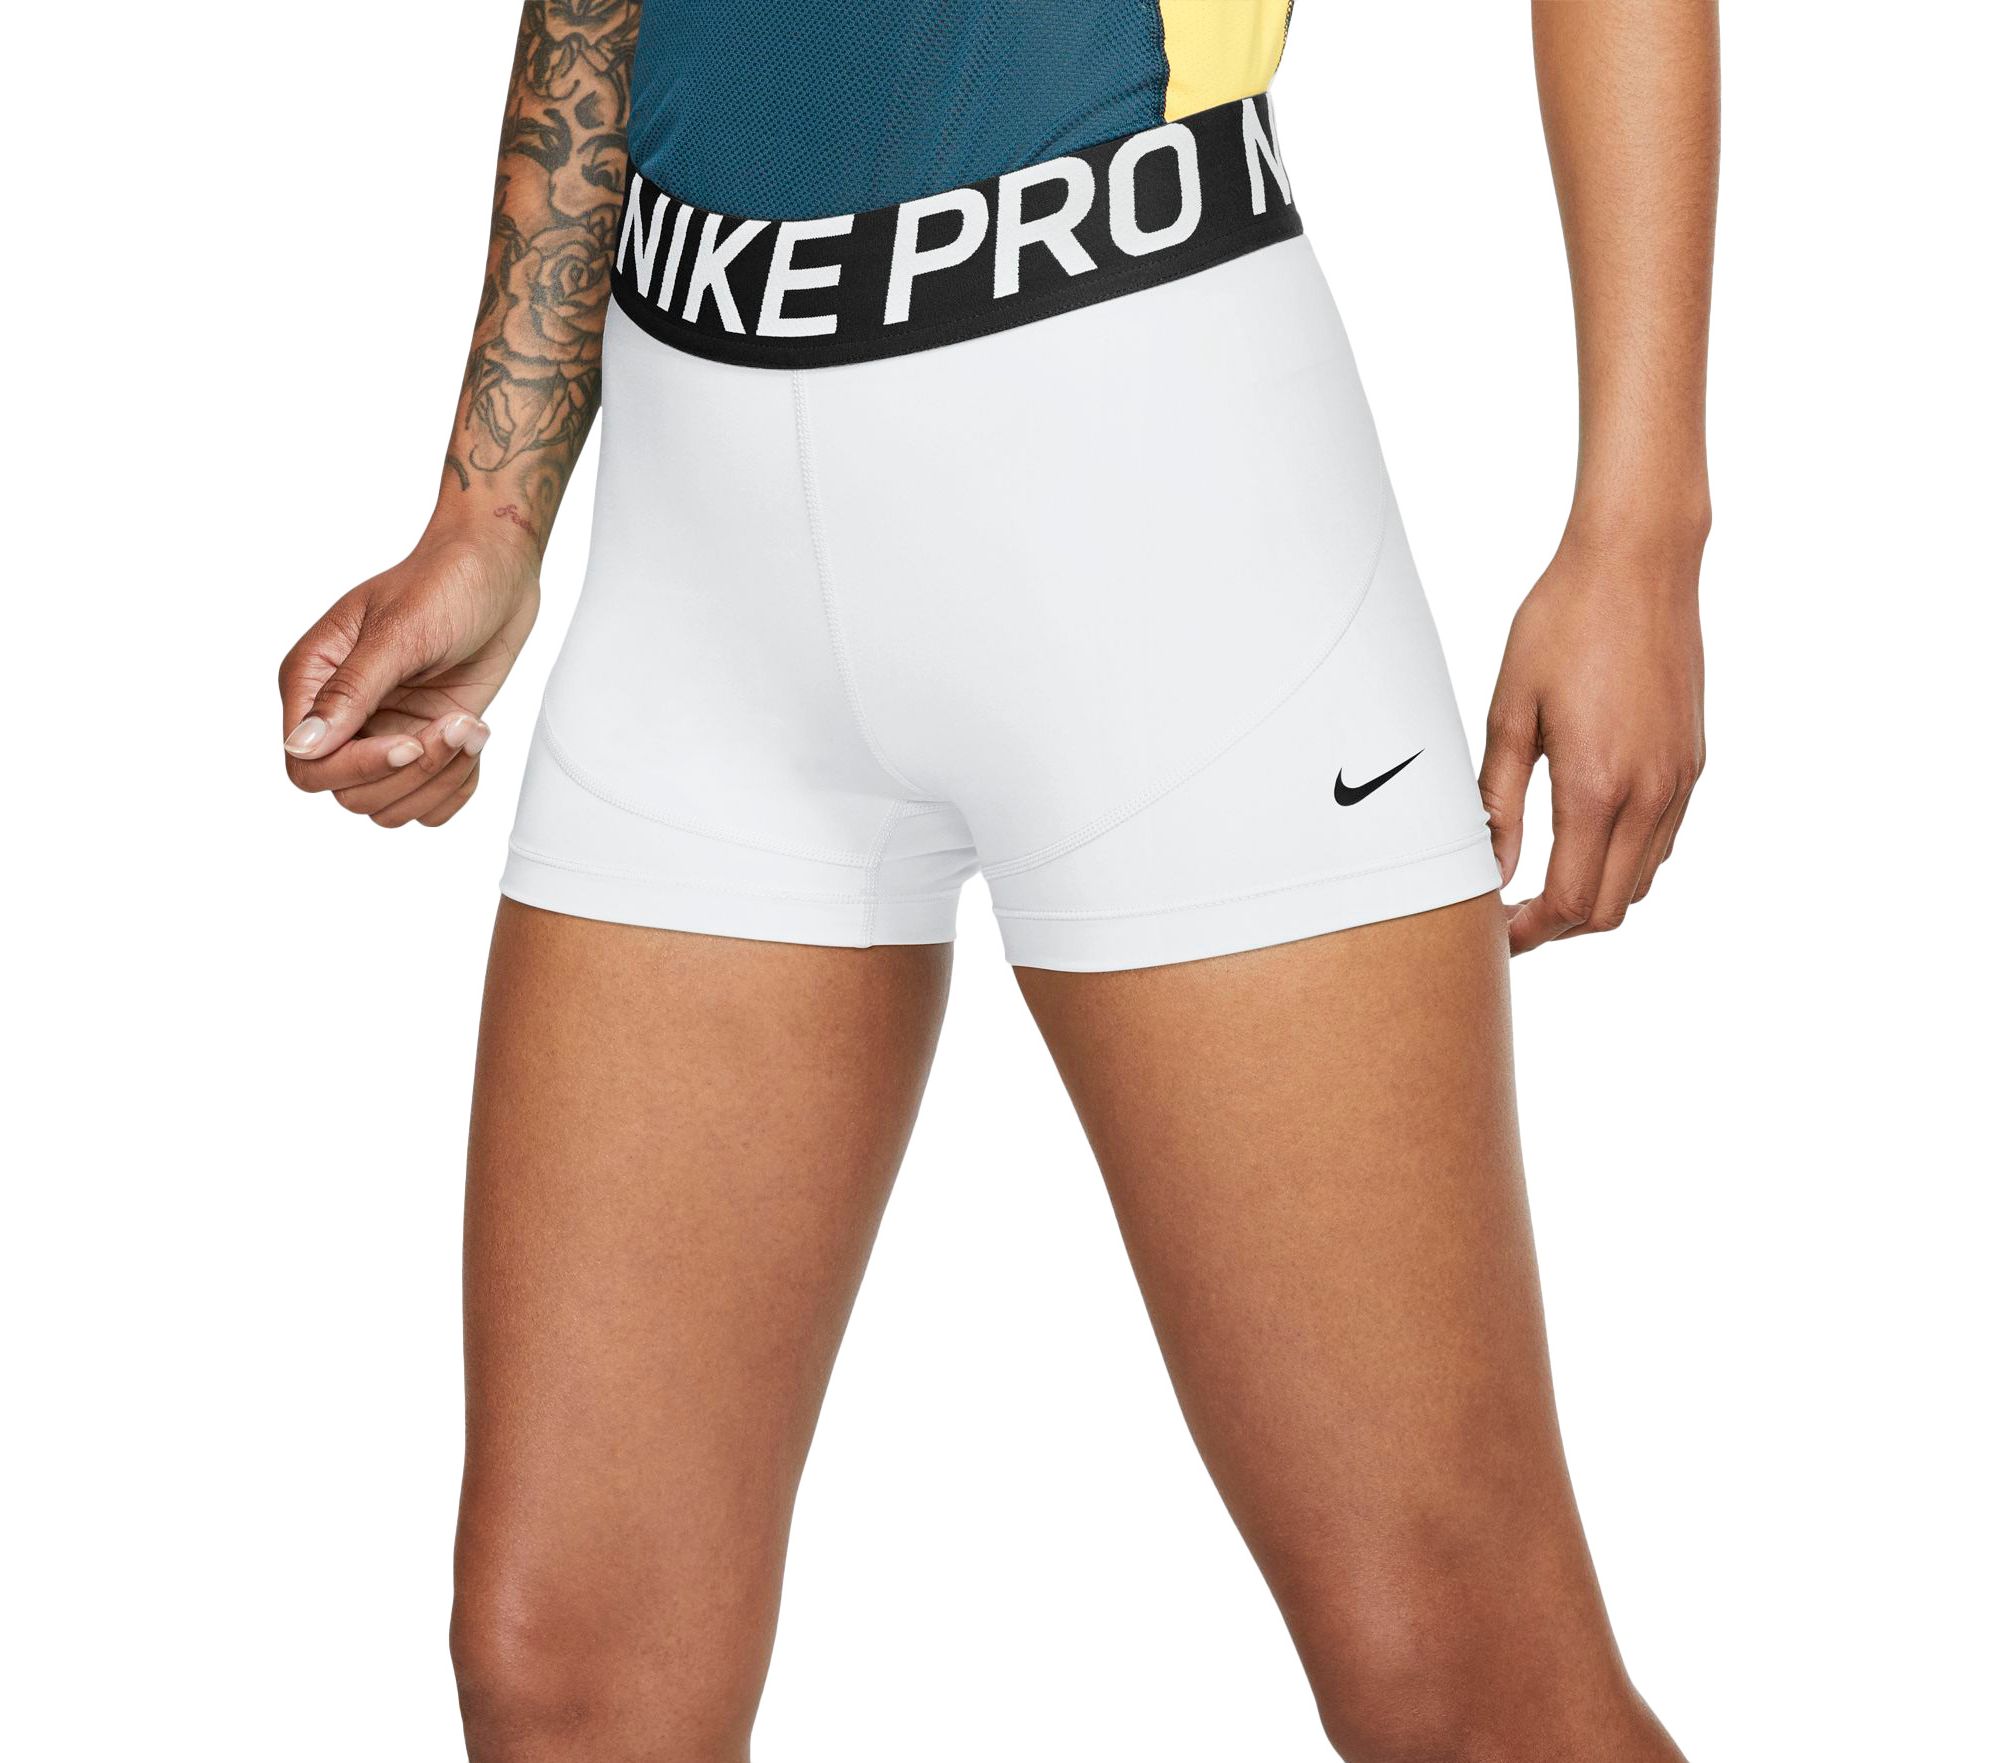 nike pro women's 3 training shorts